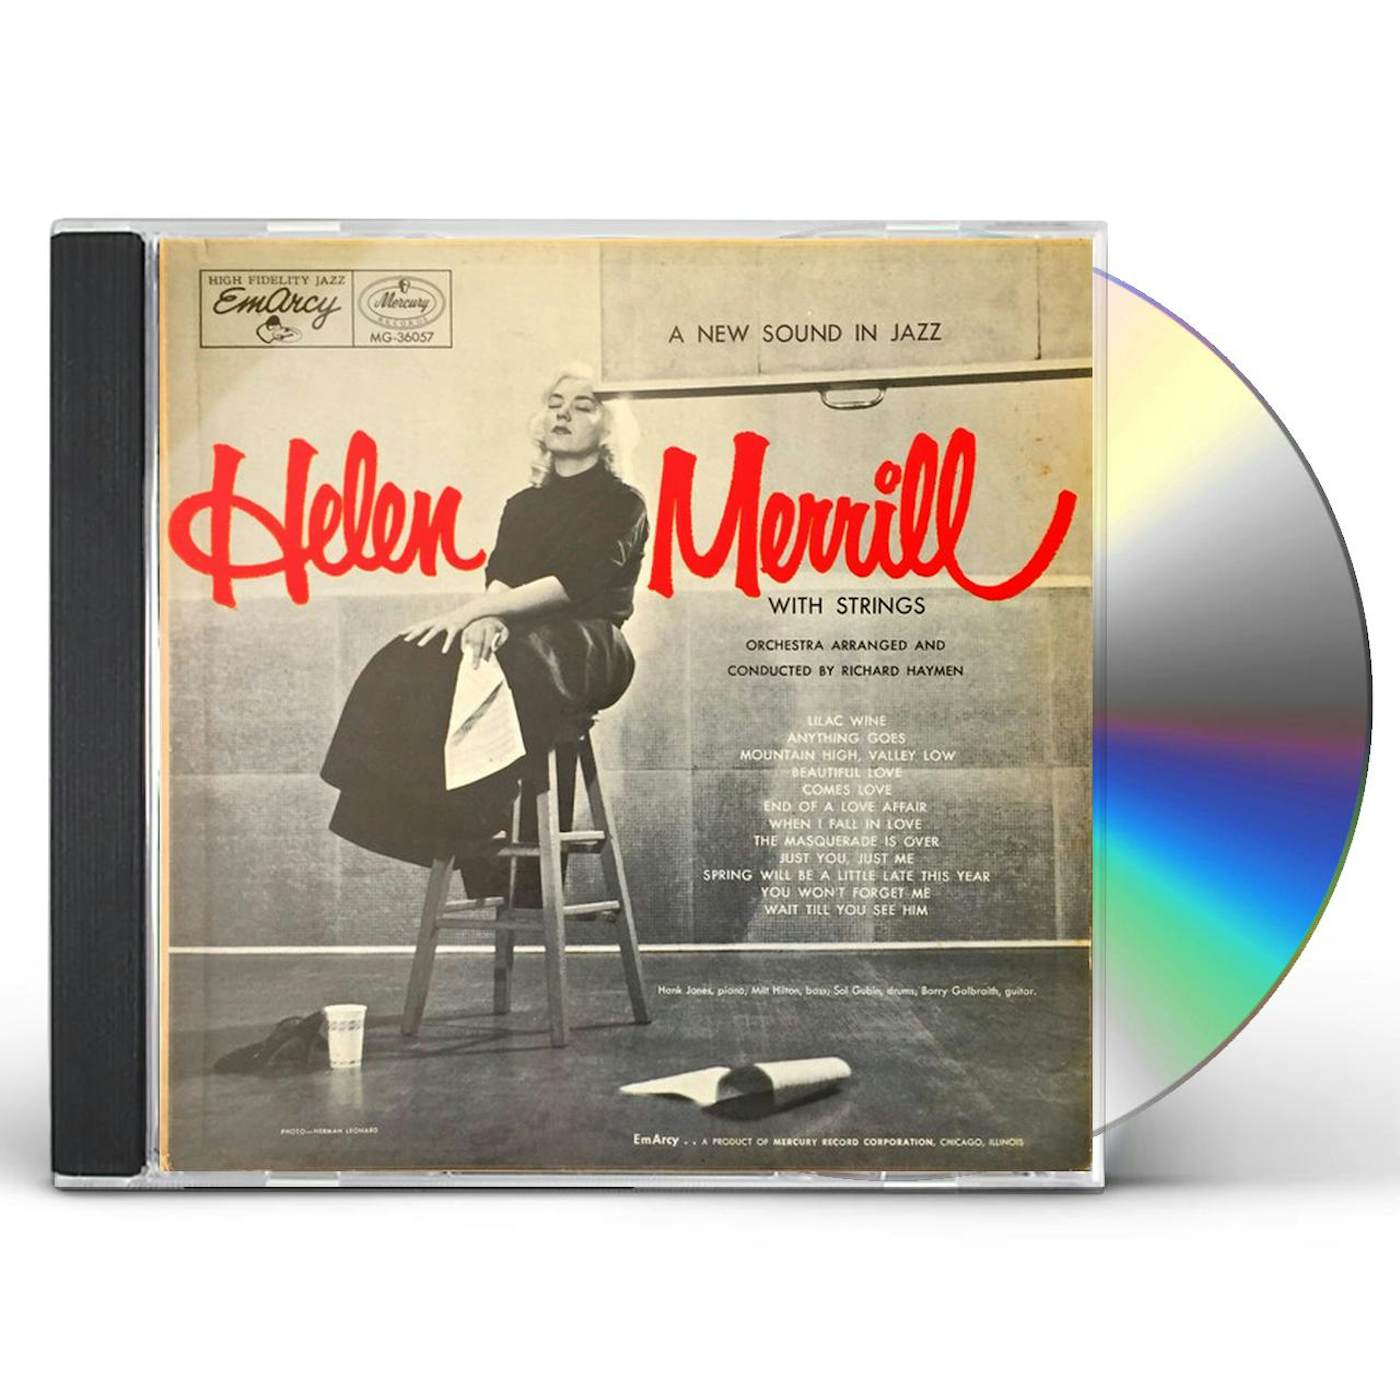 HELEN MERRILL WITH STRINGS CD